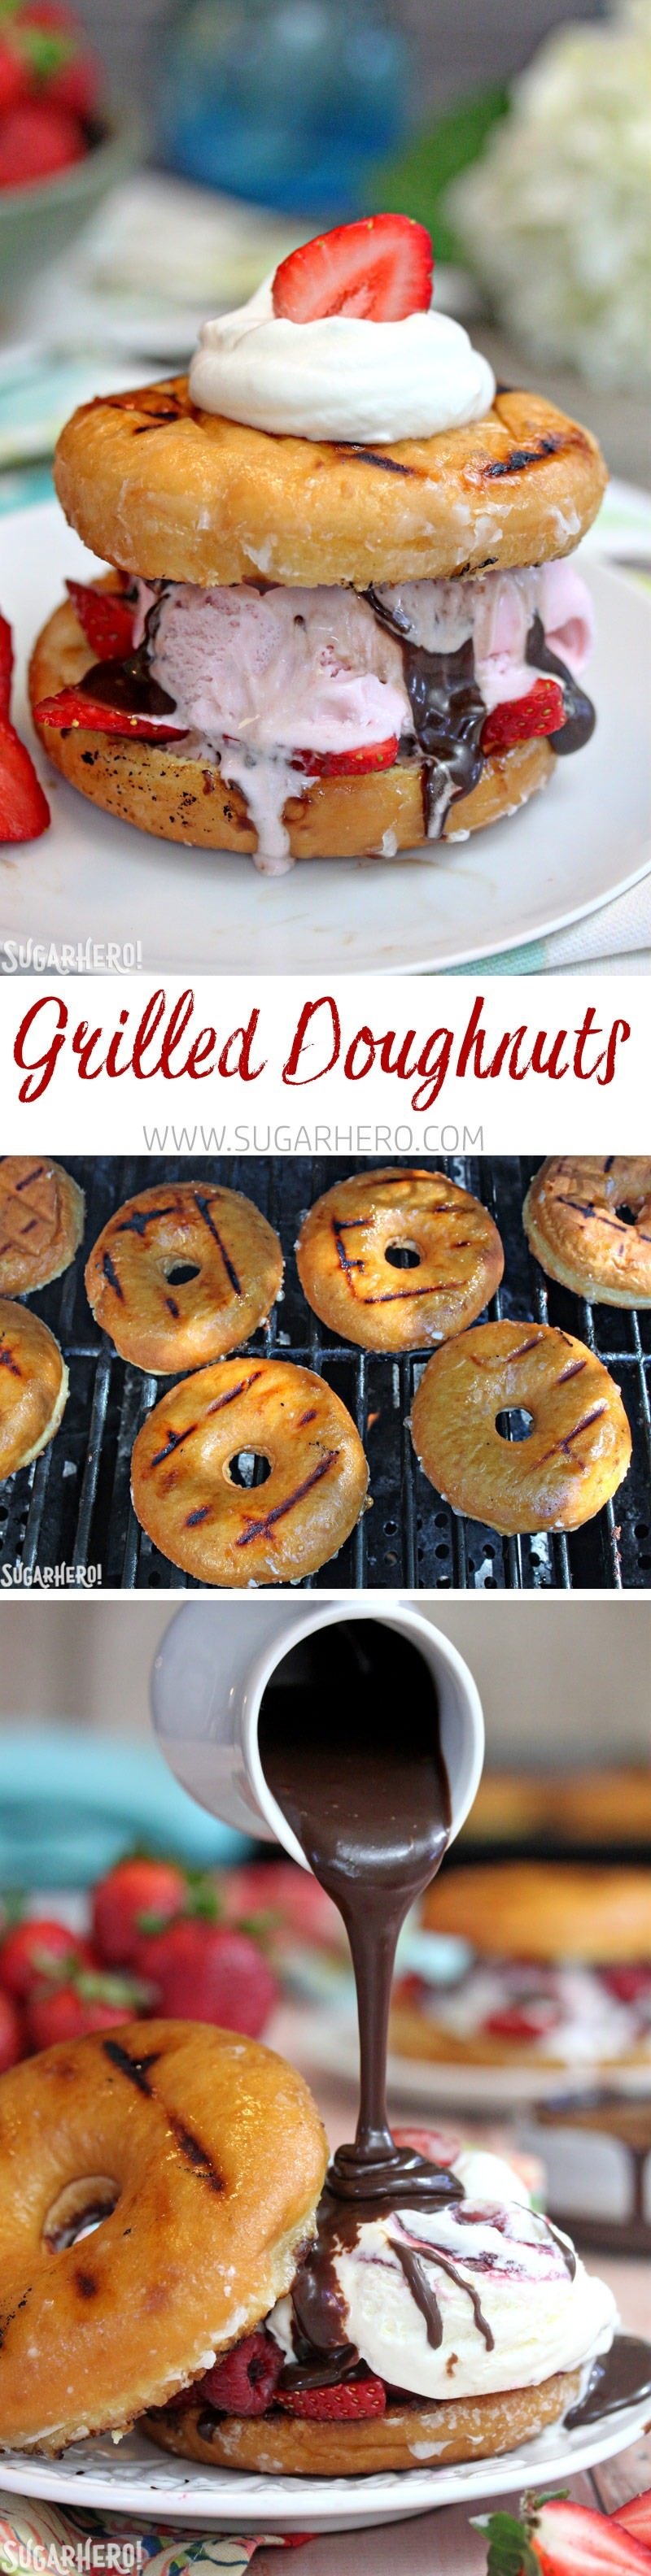 Grilled Doughnuts | From SugarHero.com